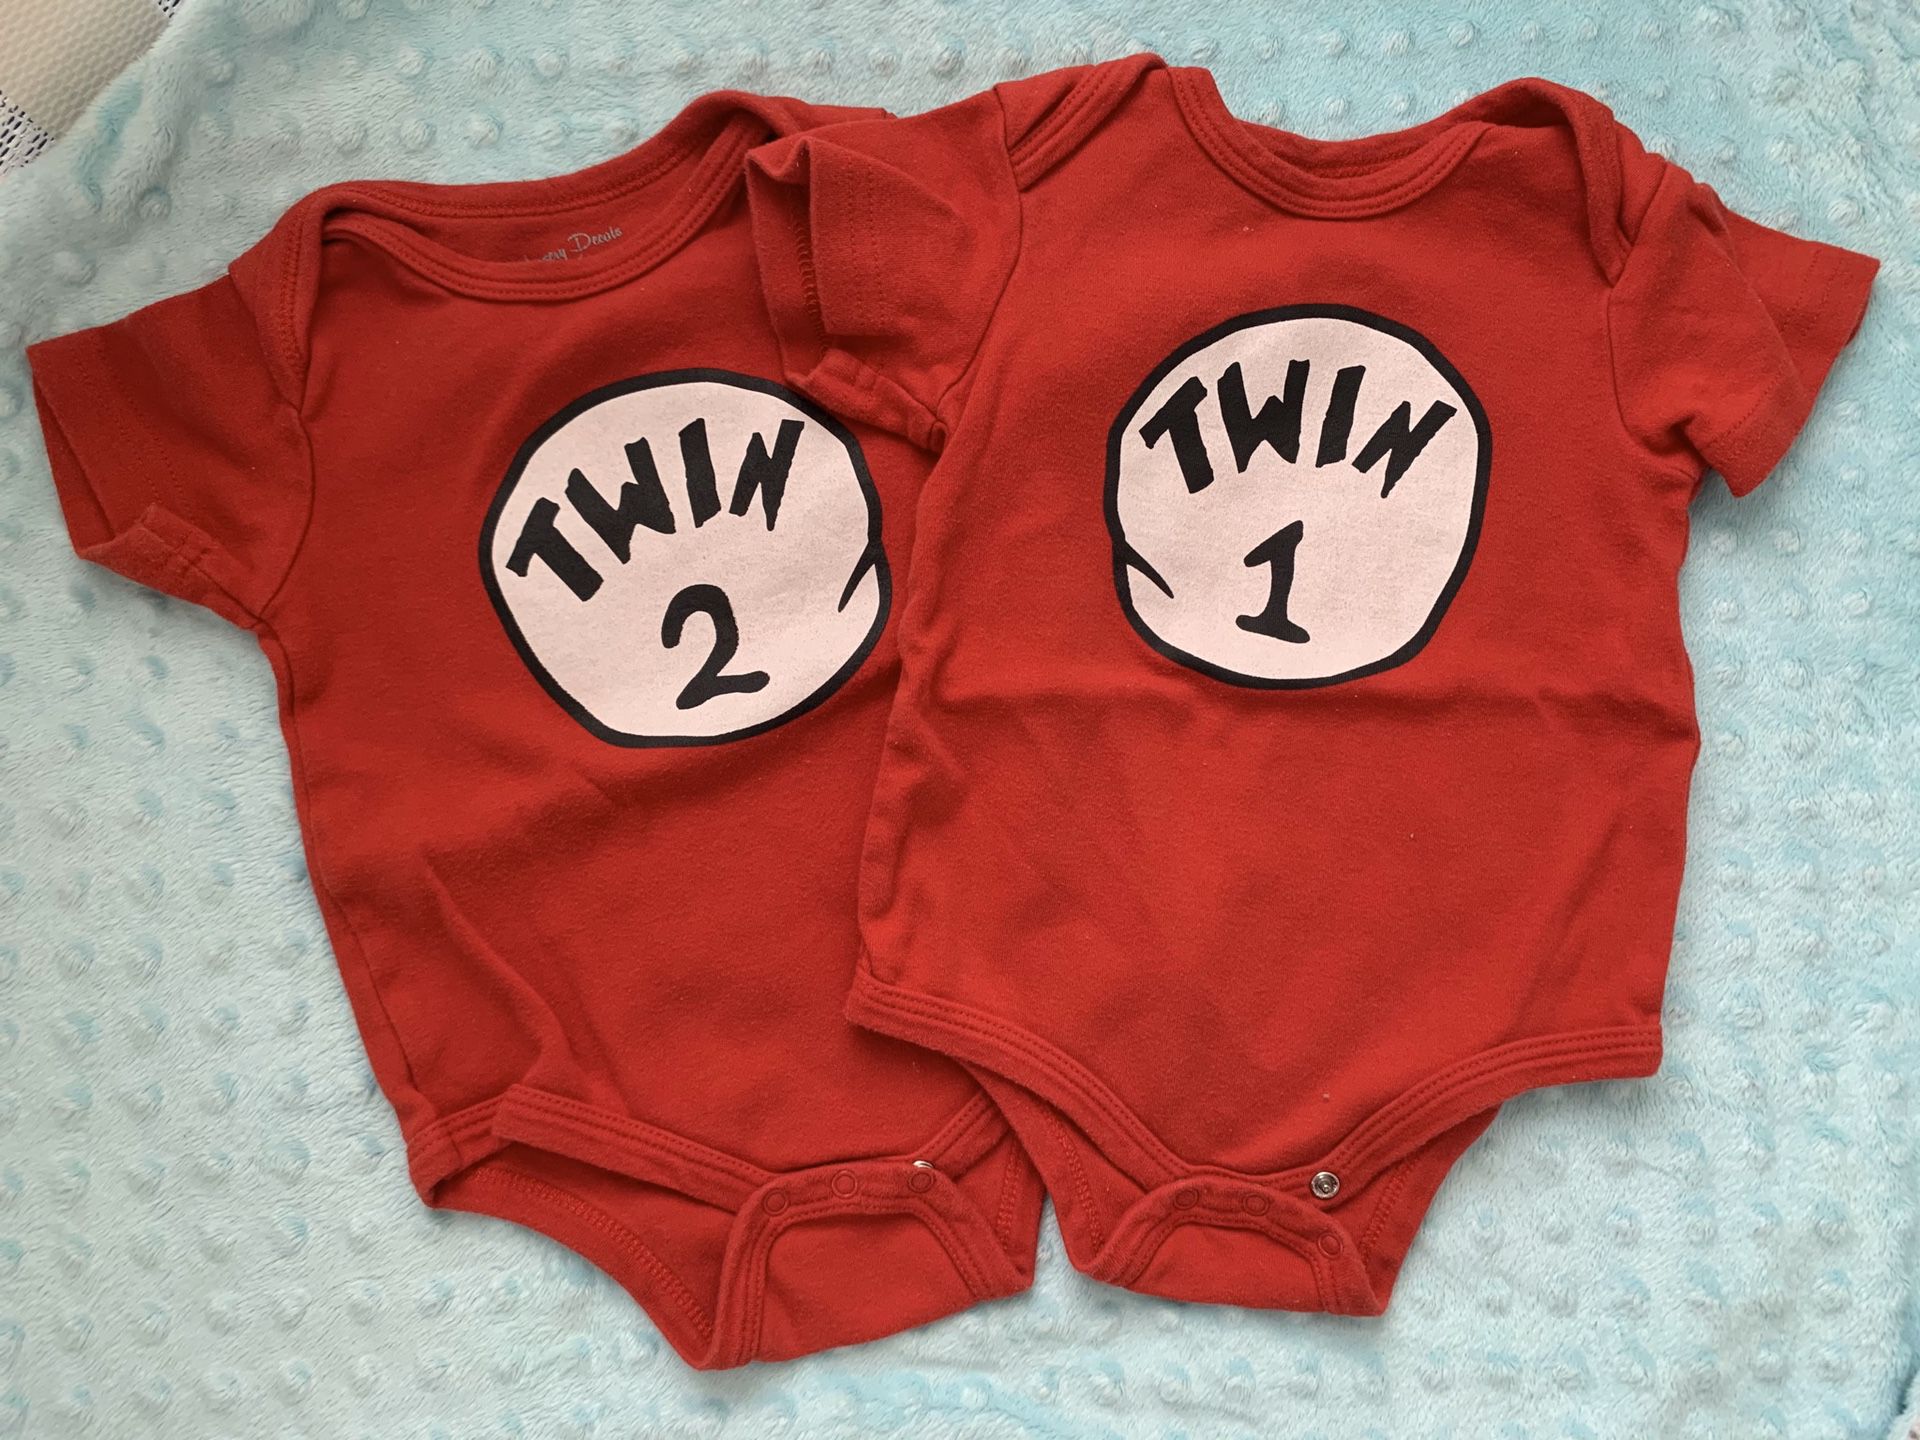 Twins onesies 3-6 months